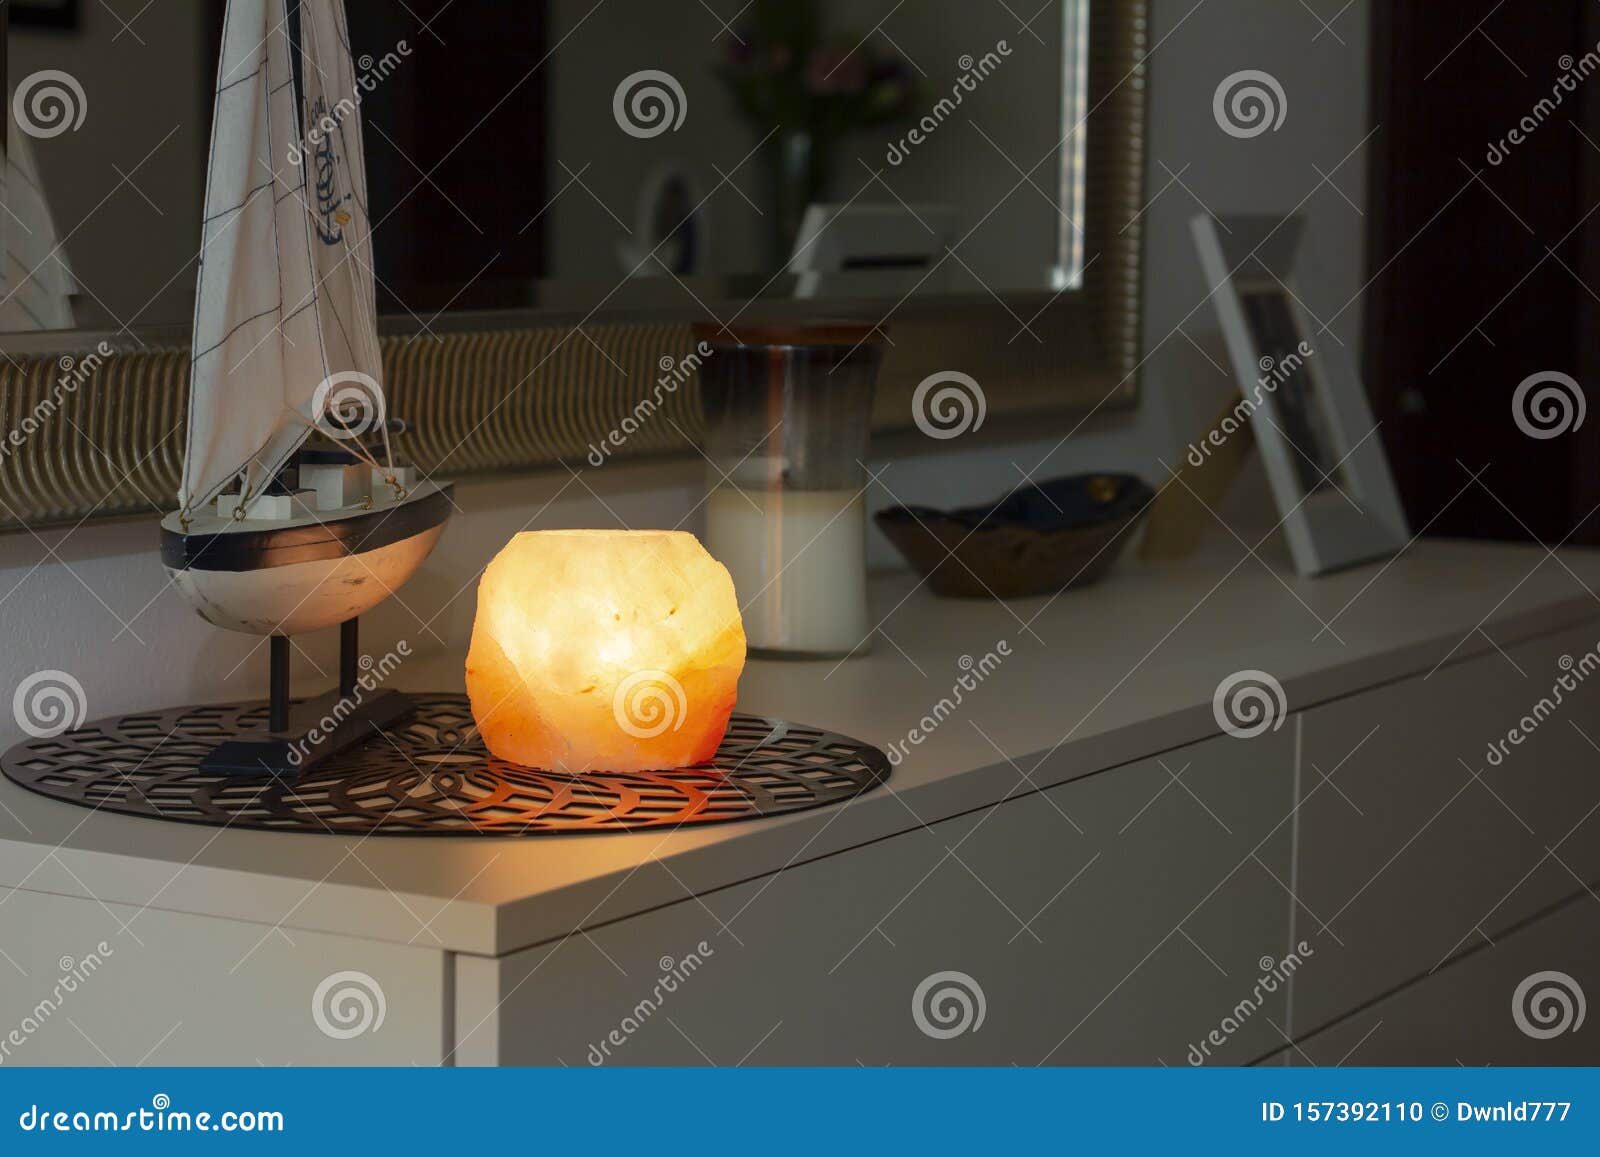 himalayan salt lamp glowing in dark